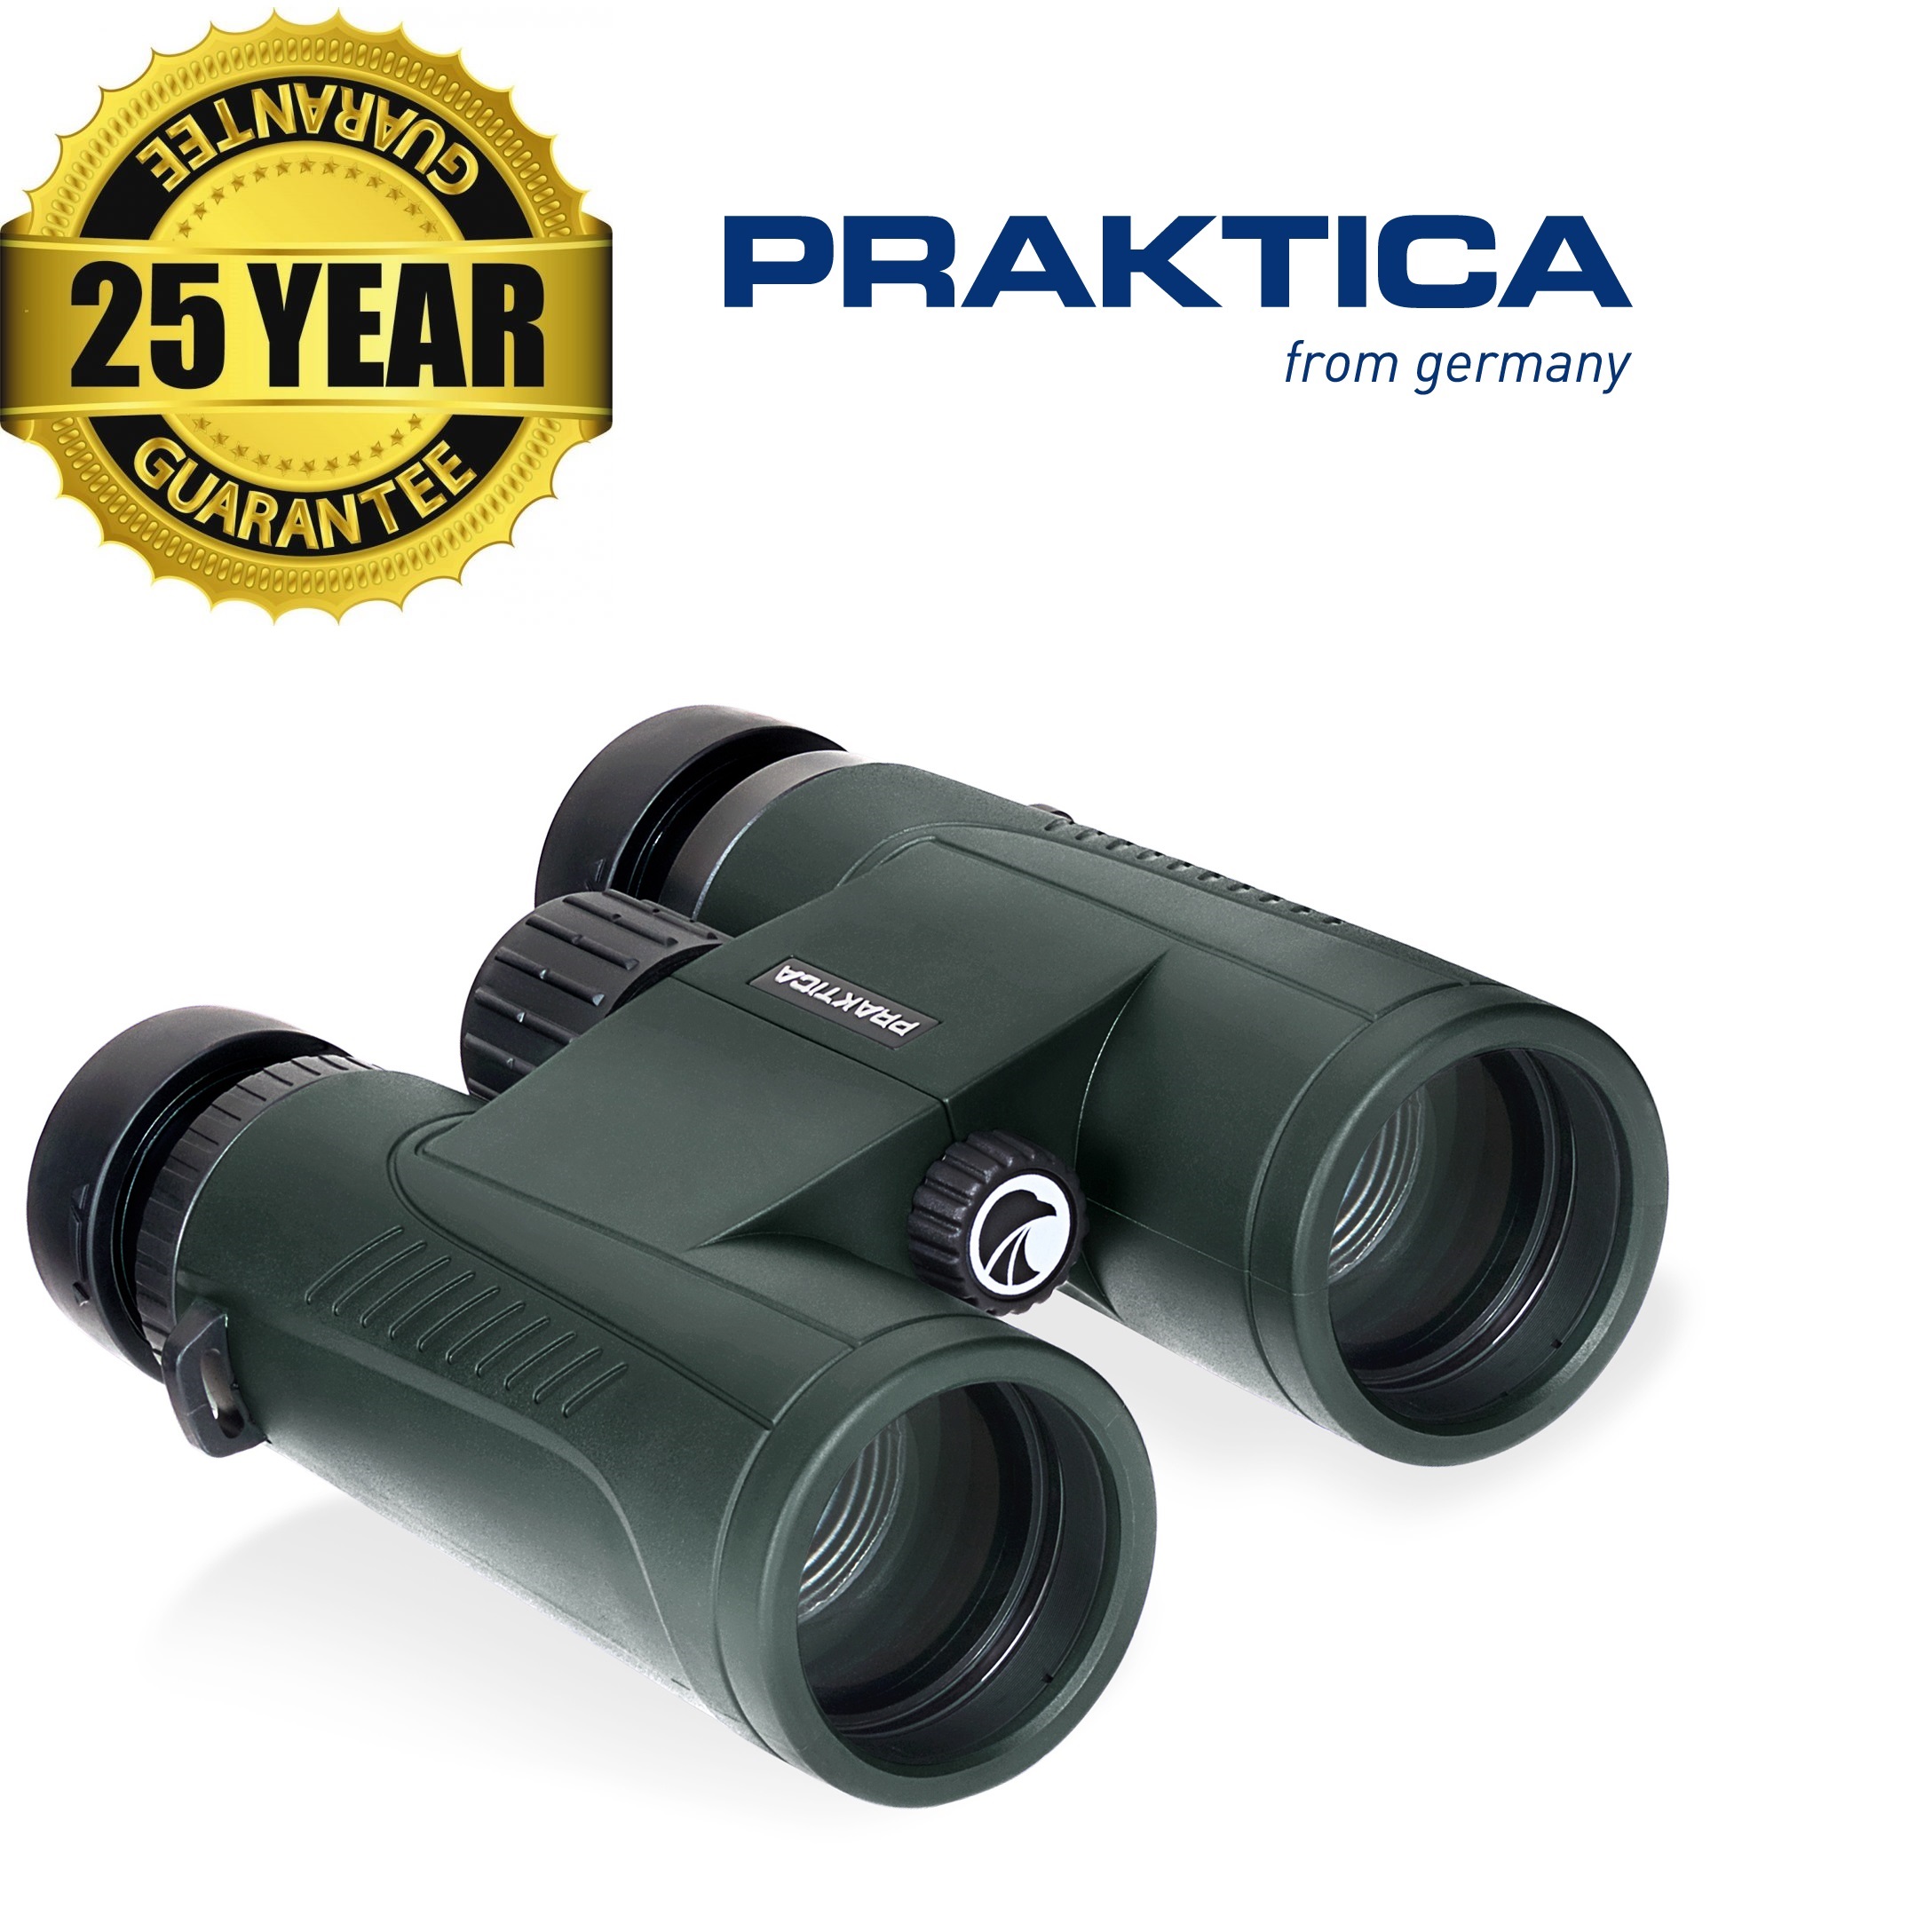 Praktica 10x42mm Odyssey Waterproof Binoculars - Green